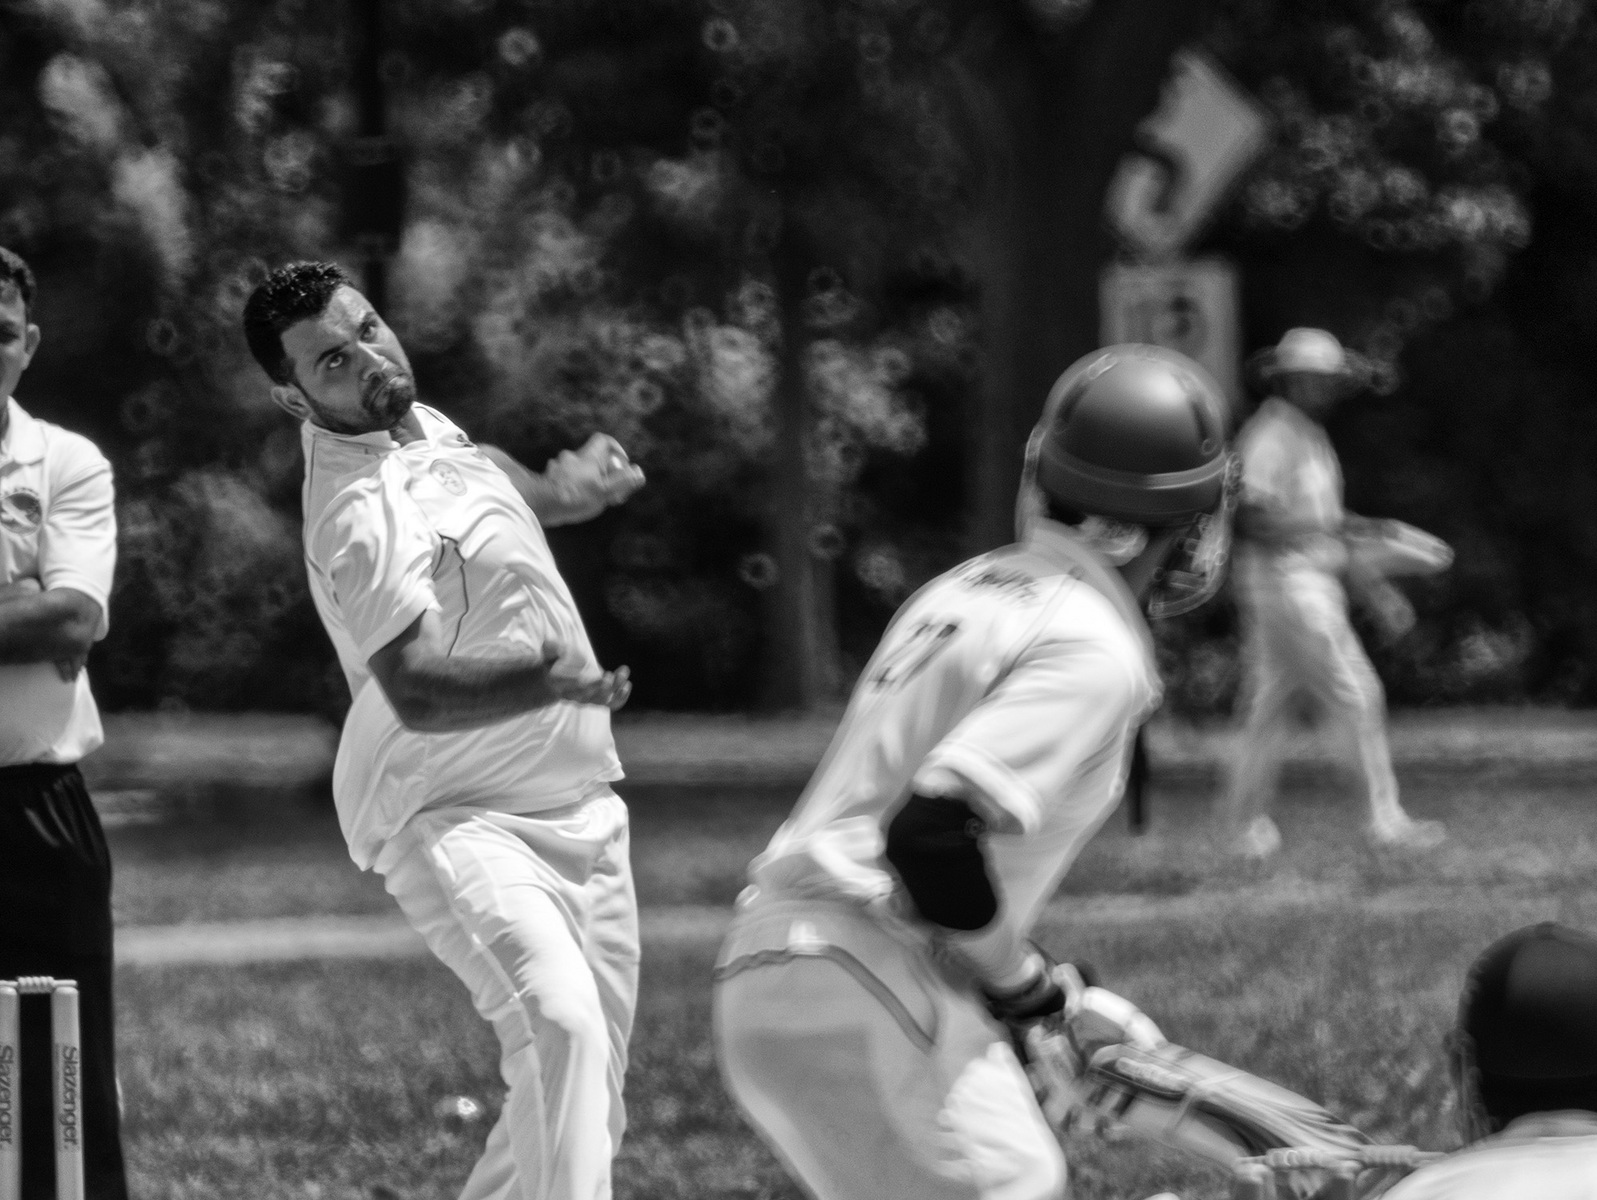 A several day Cricket match on the Mall near the Potomac : The National MALL : David Burnett | Photographer